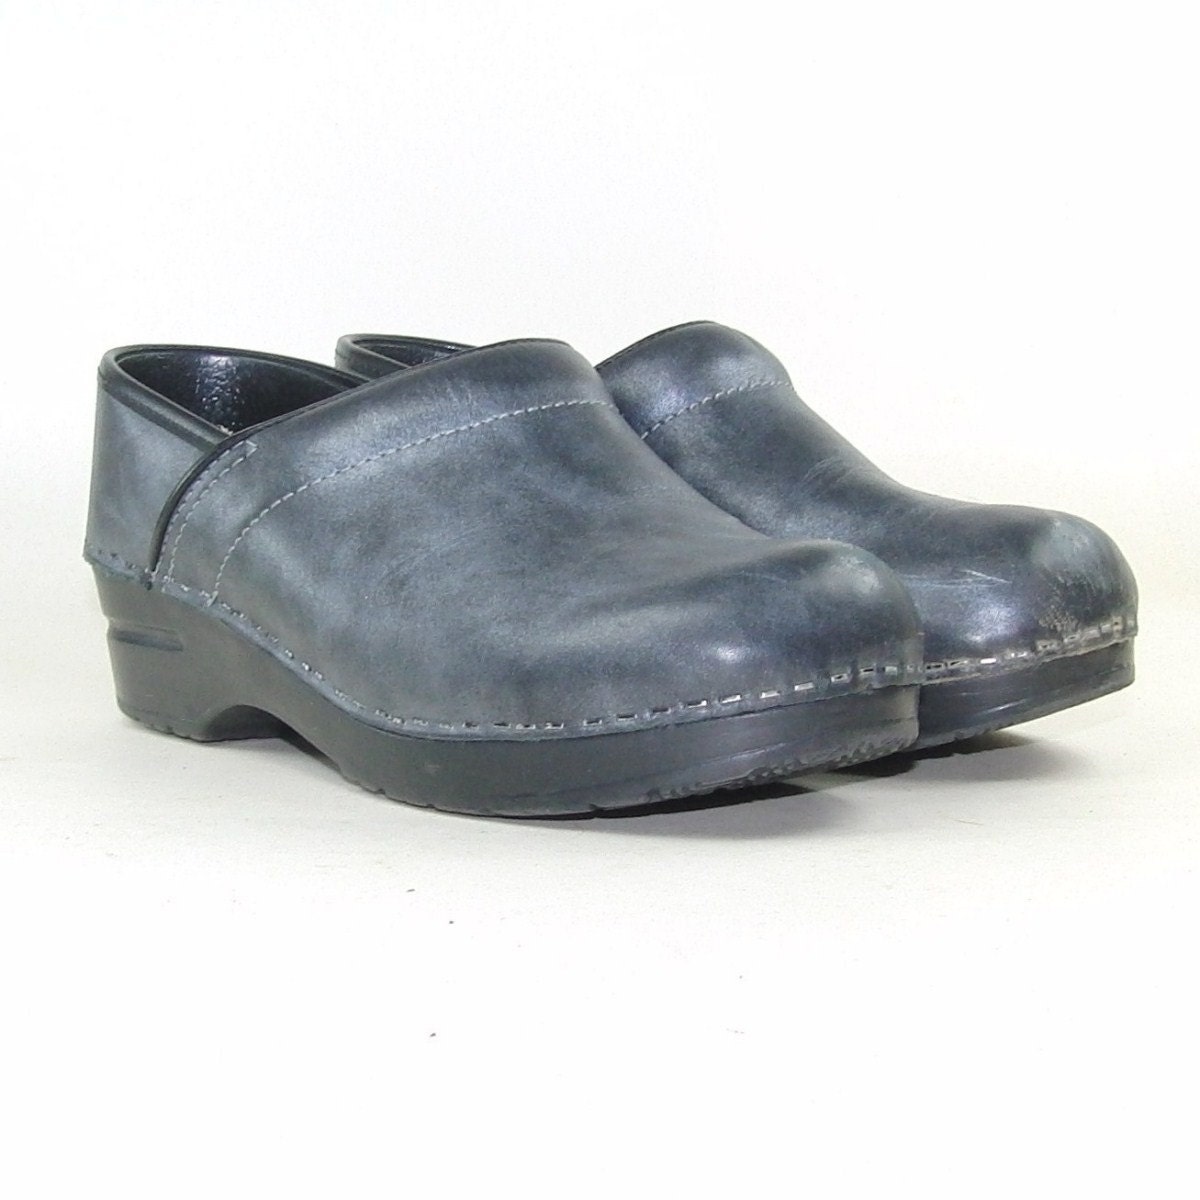 Size 9 Dansko Professional Clogs Grey Gray by DigitalFunFactory